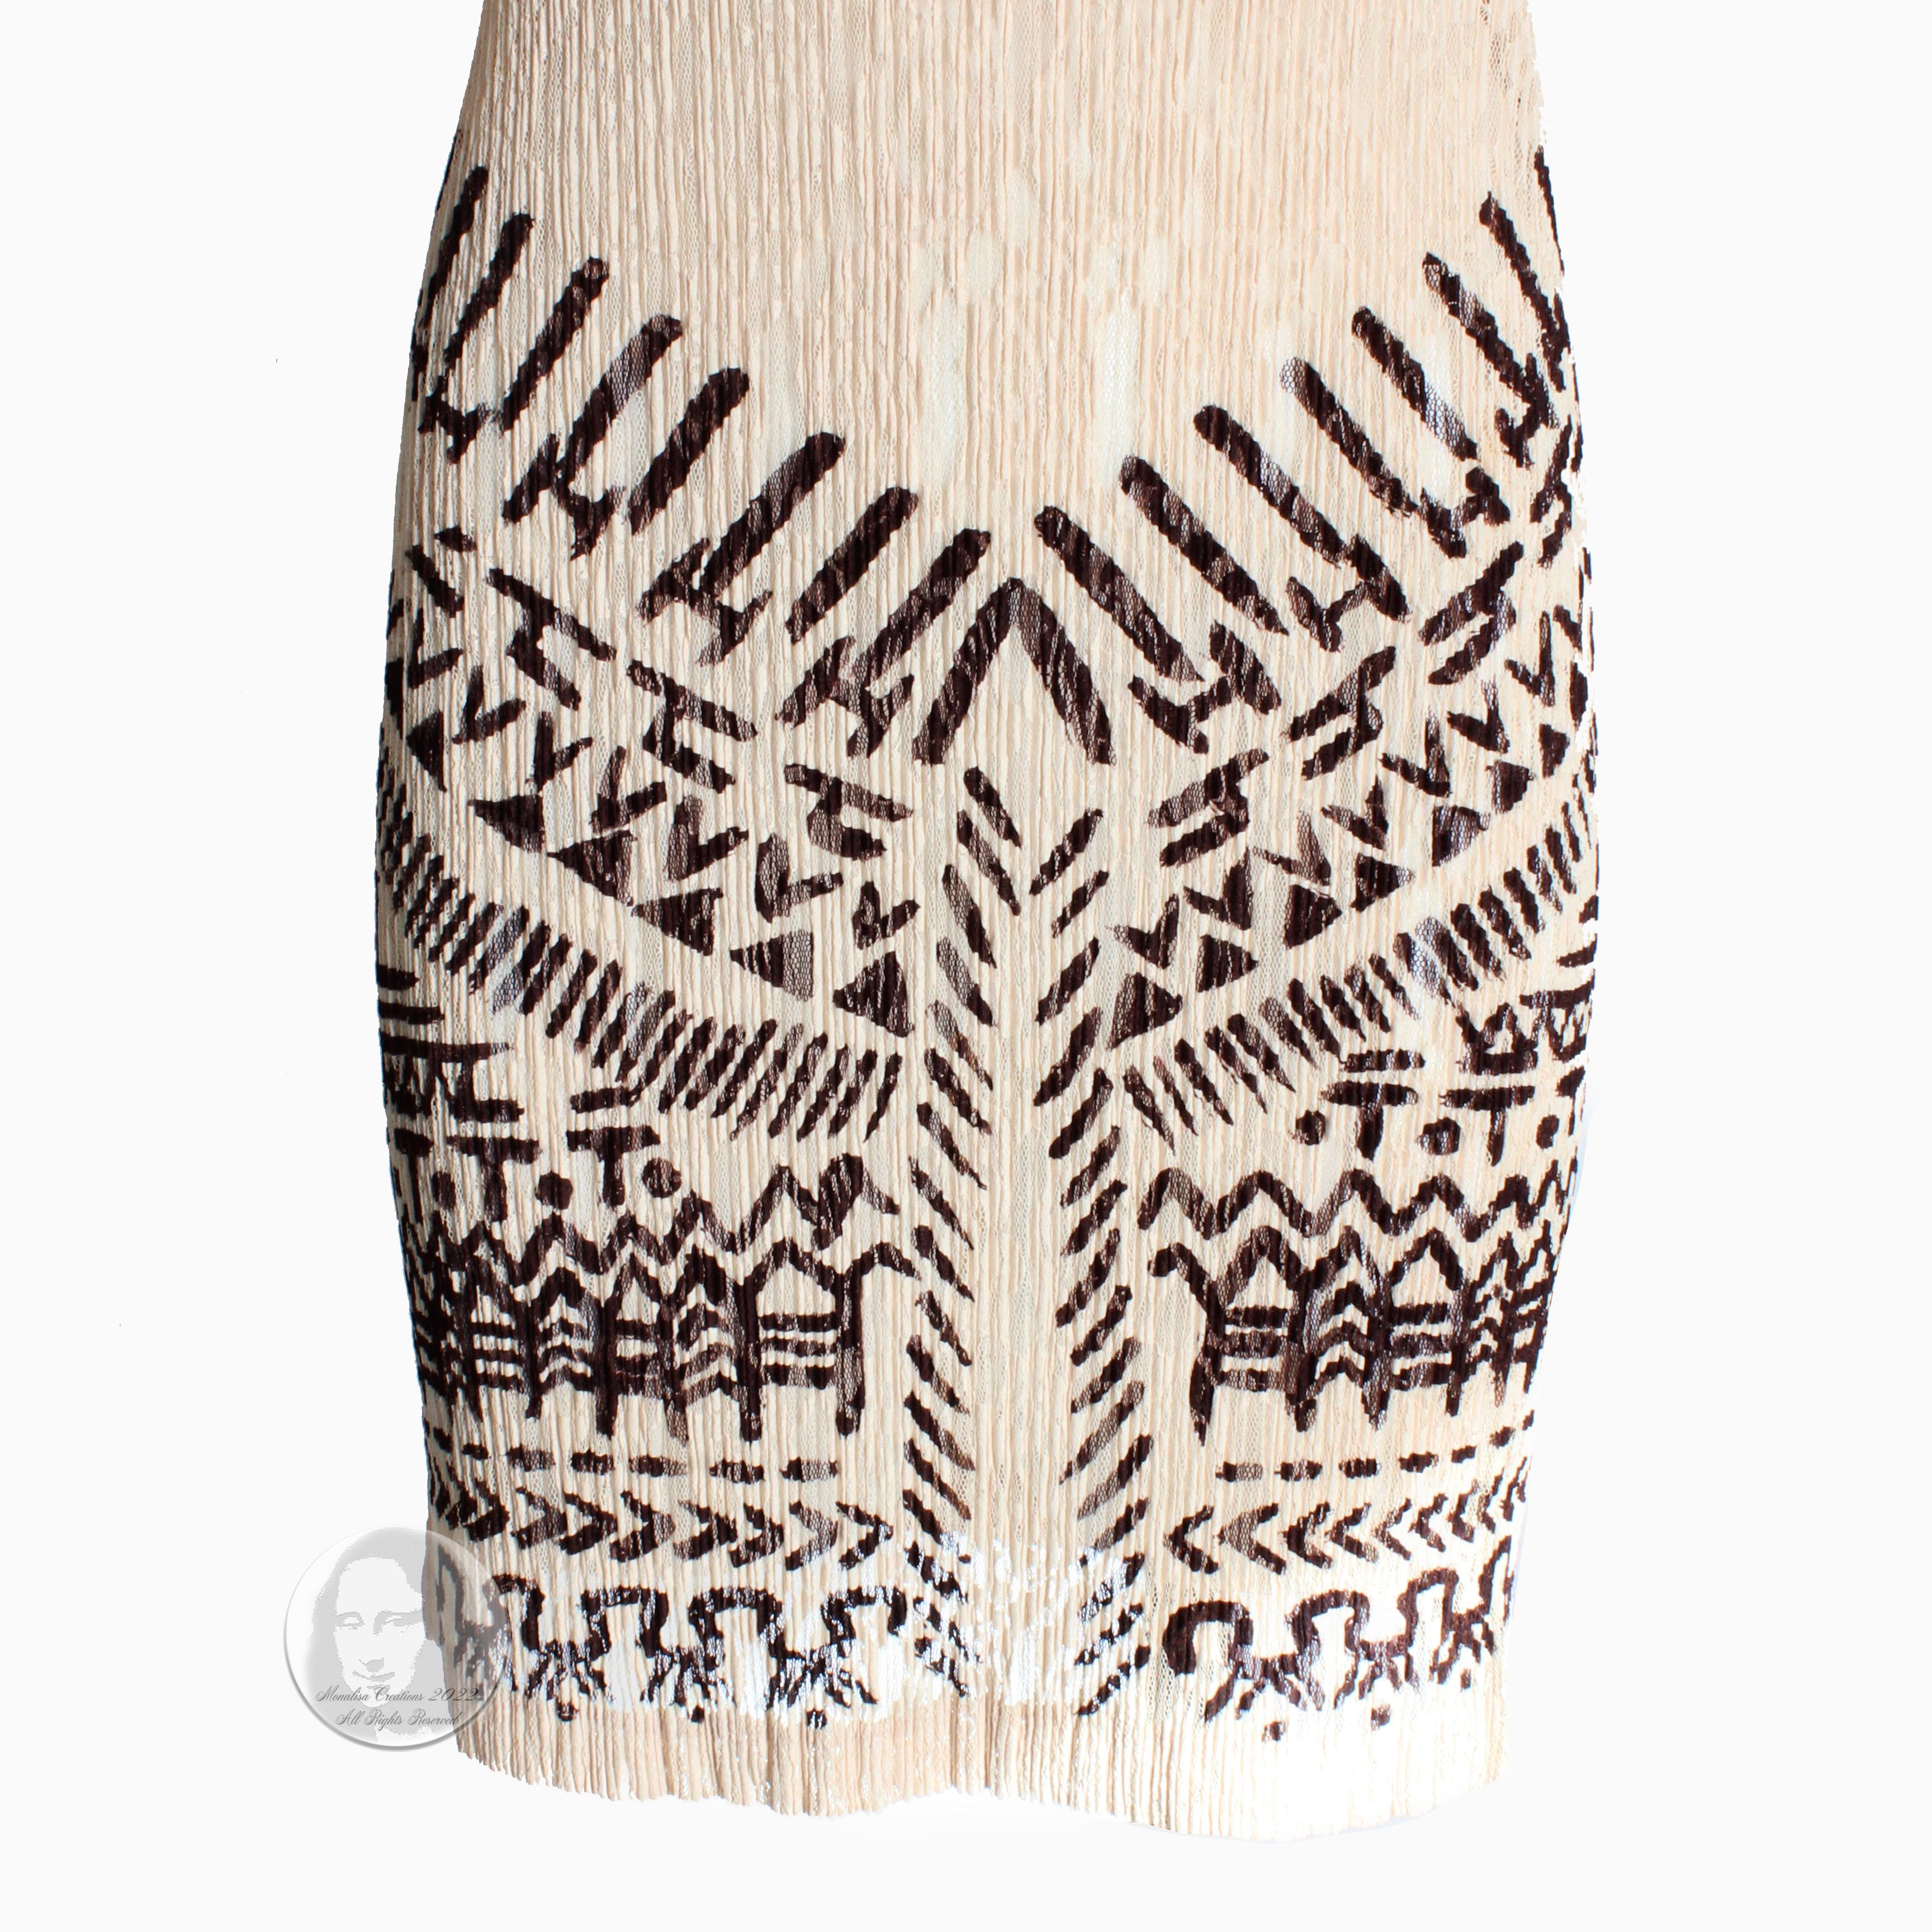 Beige Issey Miyake Dress Pleated Sheer Tunic Tattoo Tribal Print Size M 1990s Vintage